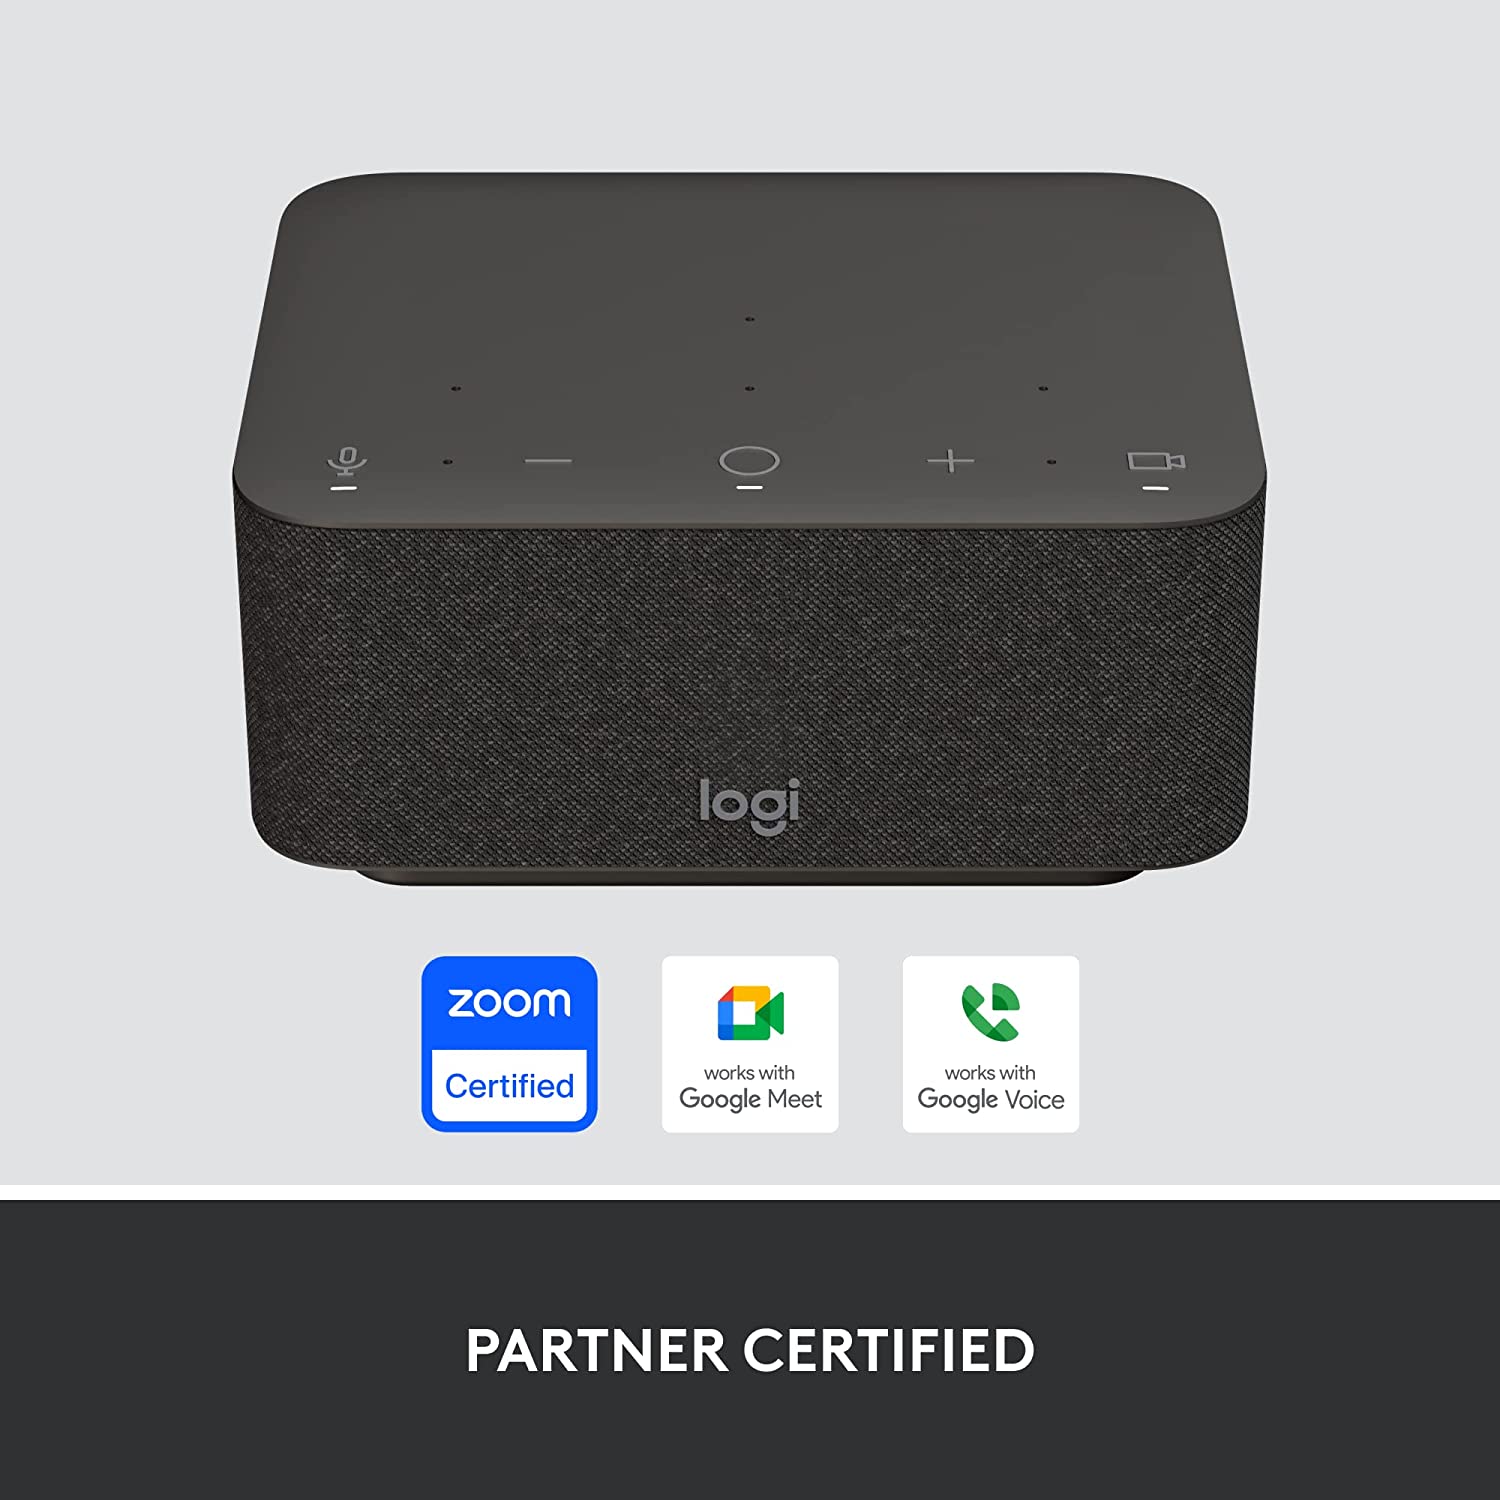 Logitech - Logi Dock, All-in-One USB C Laptop Docking Station, Speakerphone, Noise Canceling Mics, Bluetooth - Dispatch in 2-3 Business Days